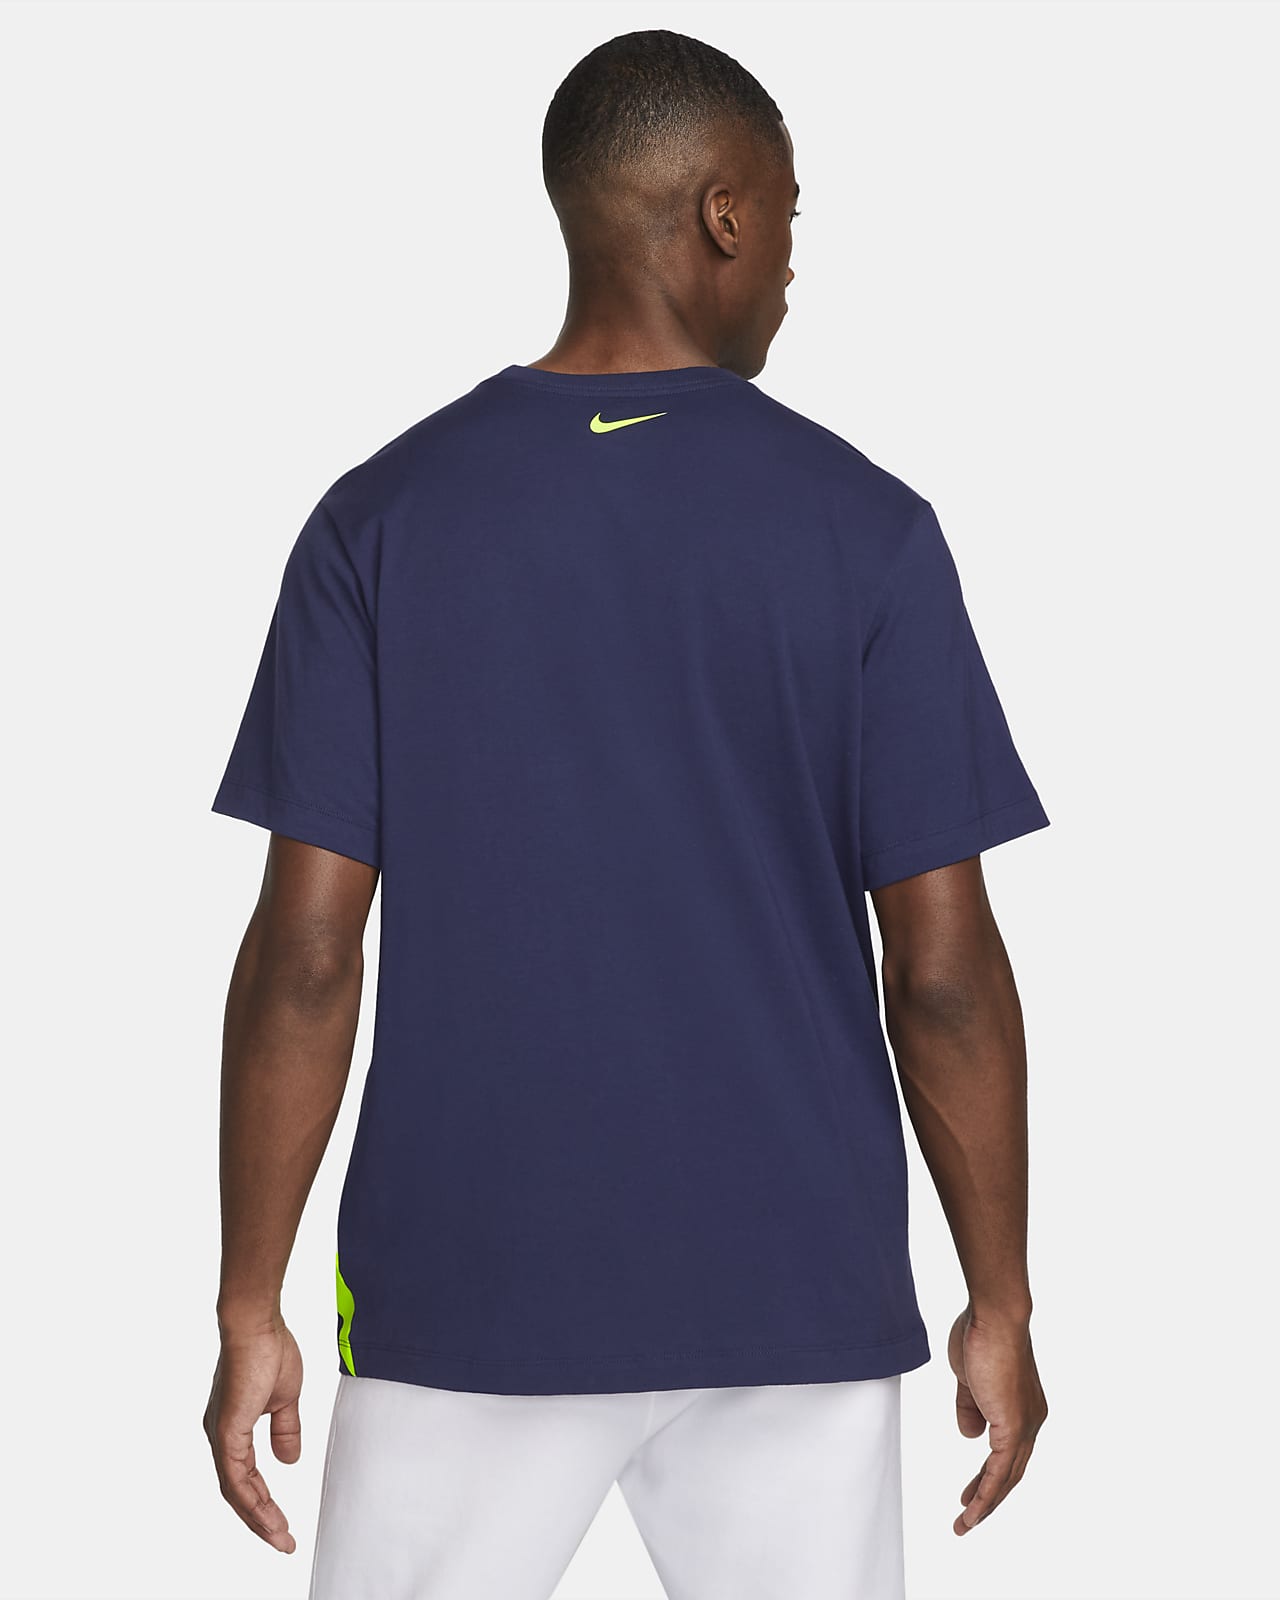 Ellendig Brood leider Tottenham Hotspur Men's Soccer T-Shirt. Nike.com